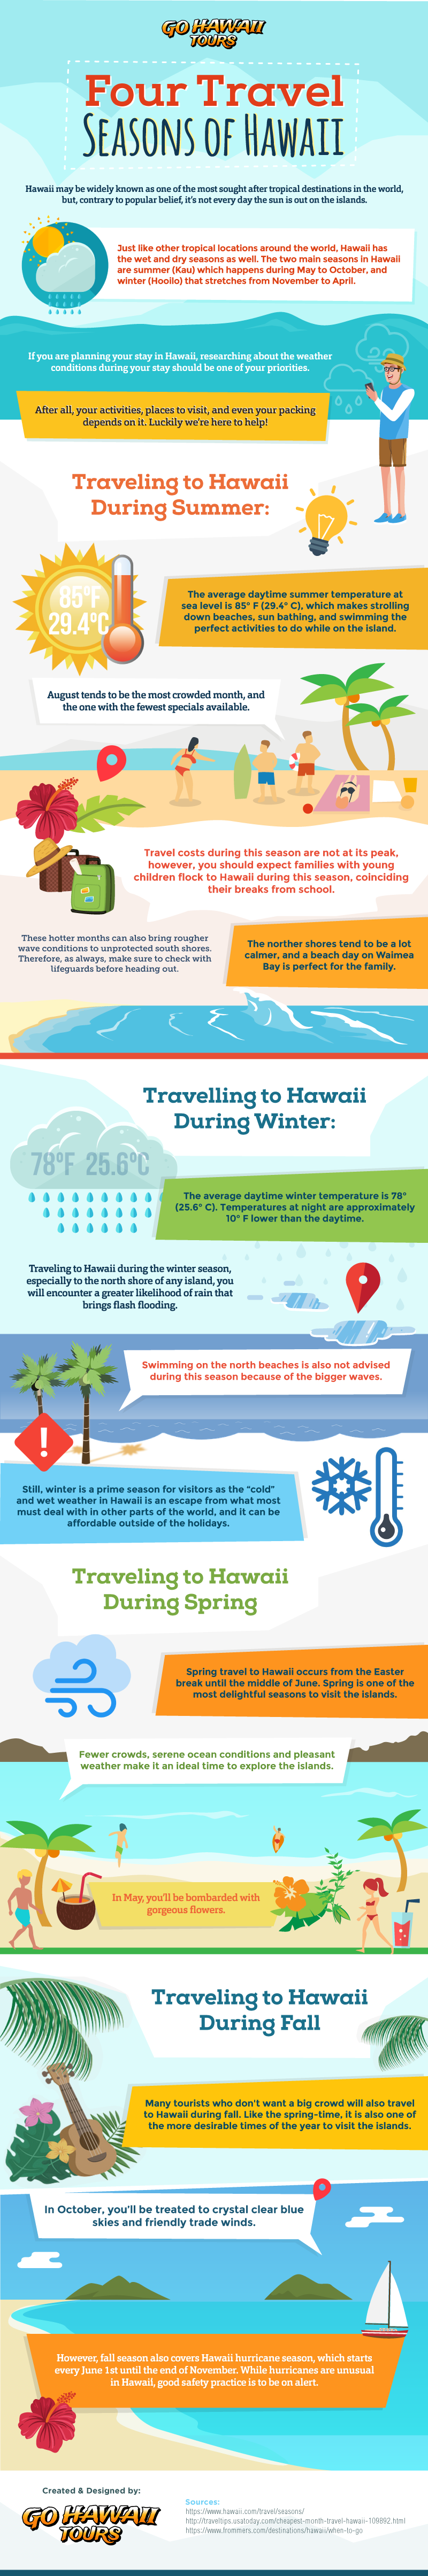 Four Travel Seasons of Hawaii Infographic Image